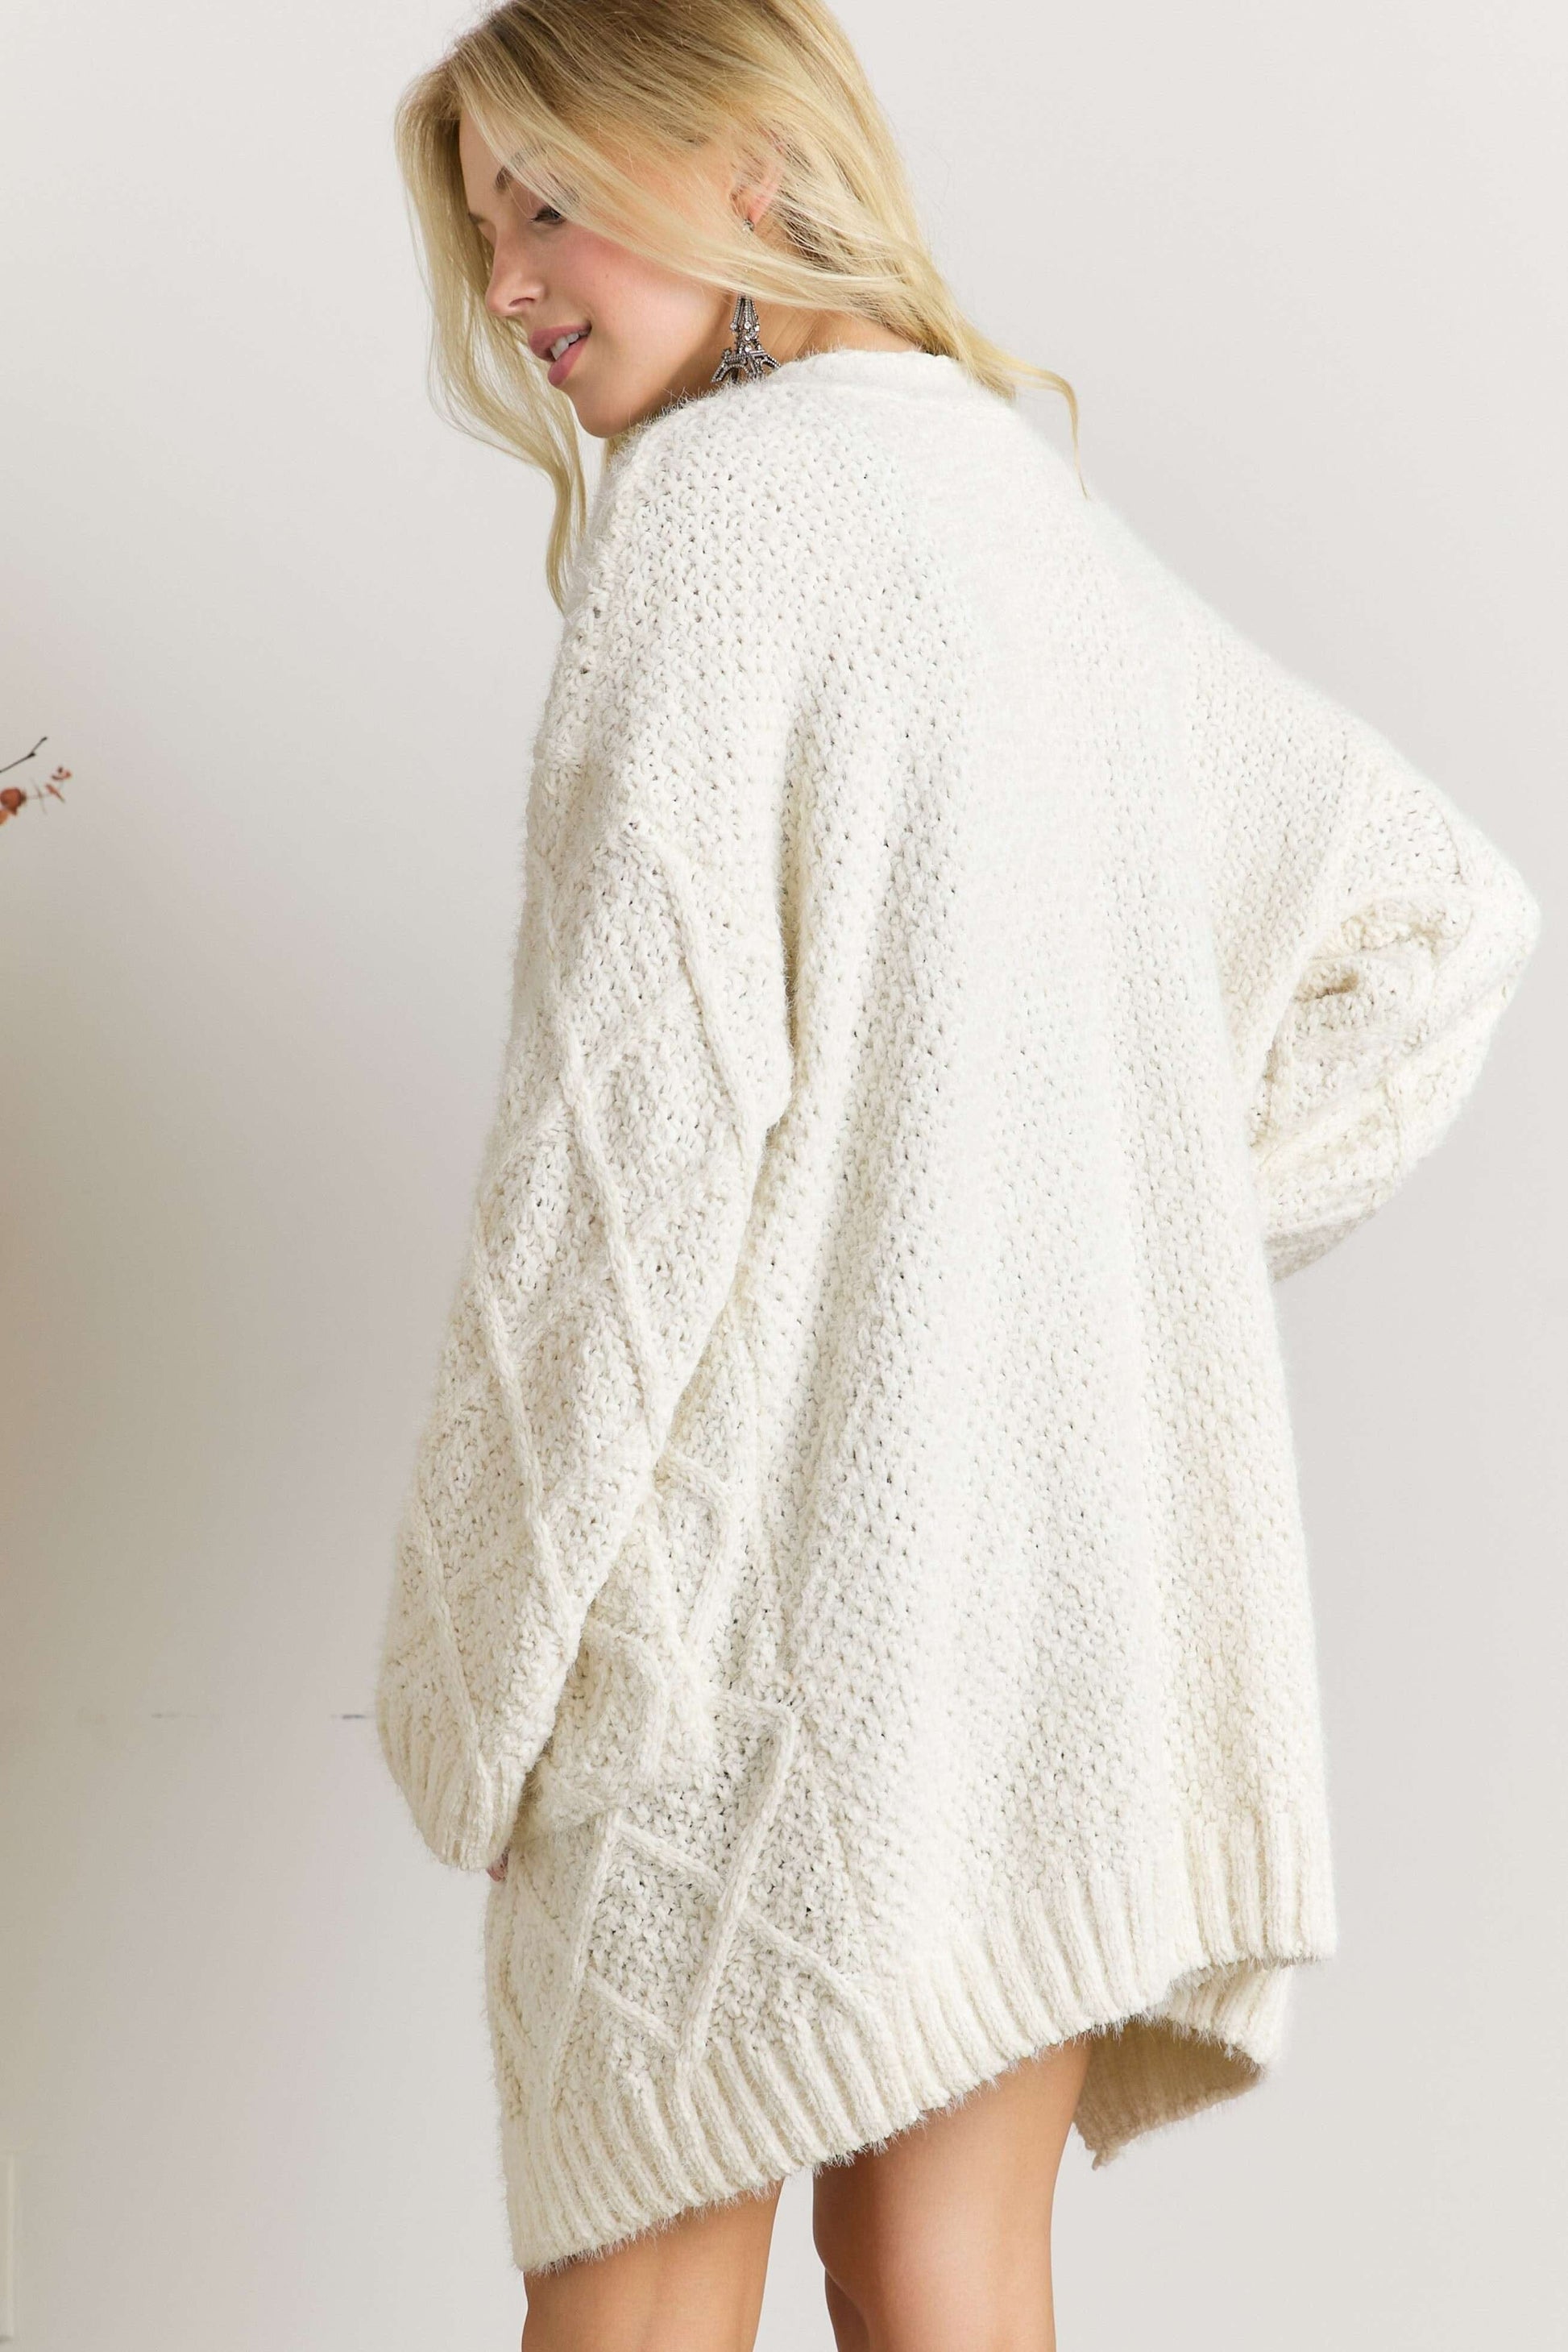 Irresistible Ivory Chunky Knit Cardigan Cardigan Adora 